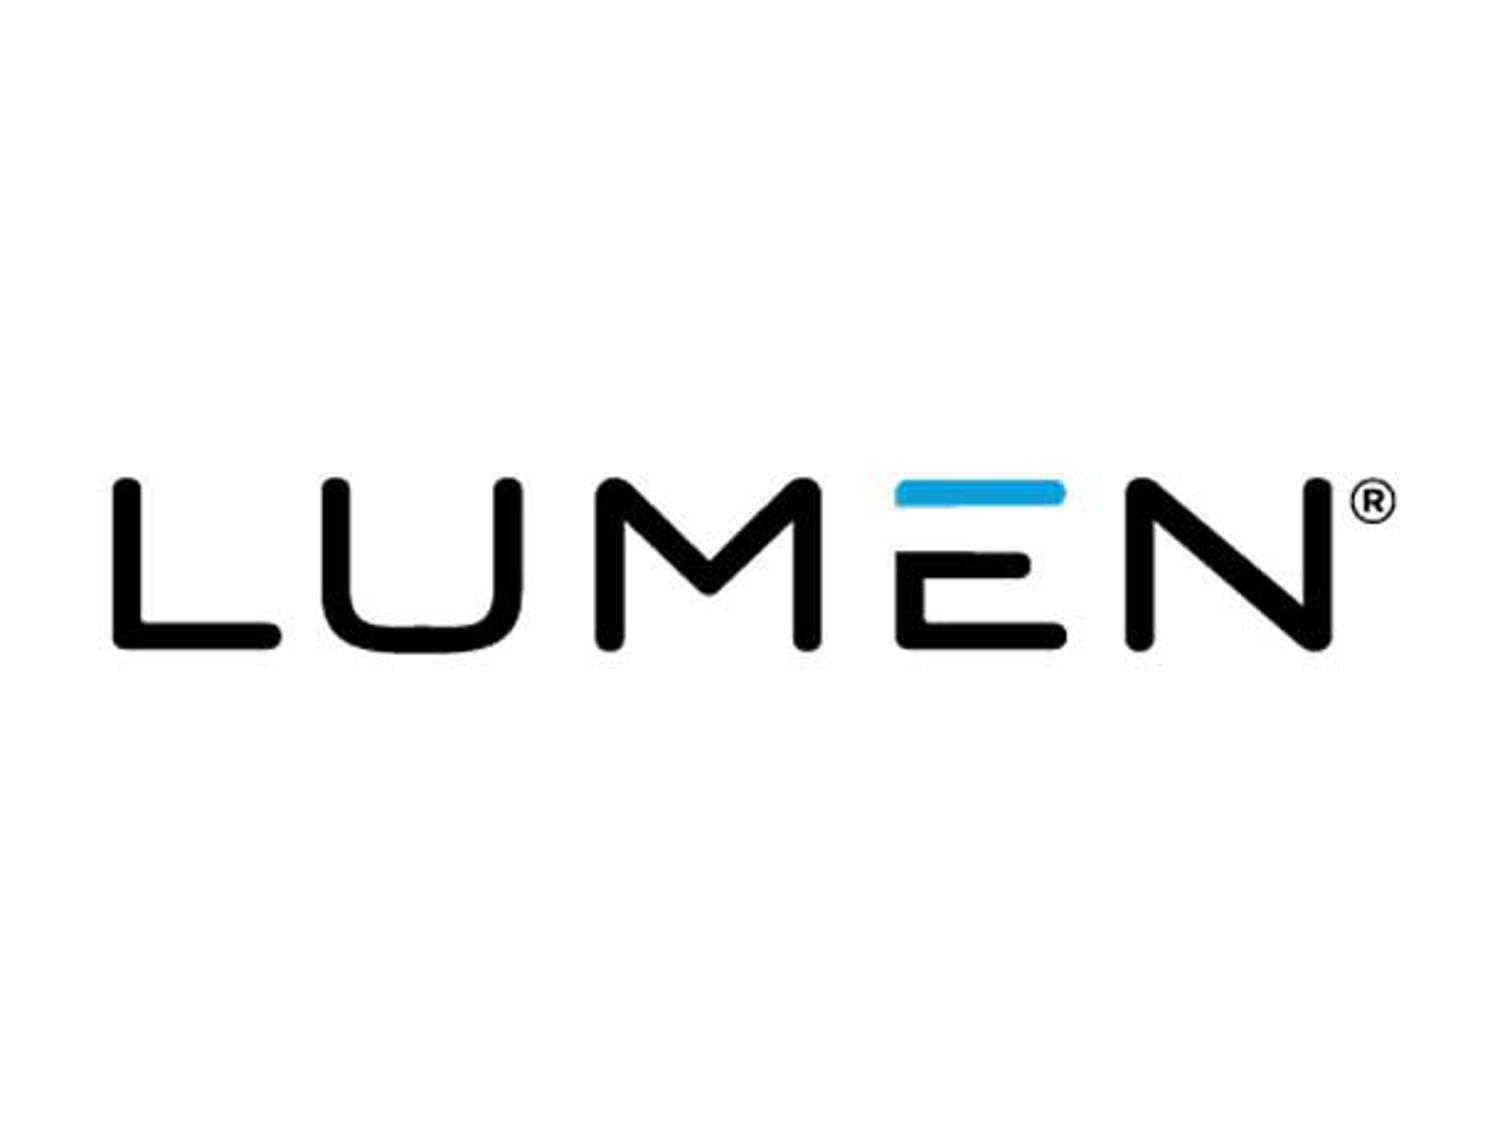 https://colocsx.com/wp-content/uploads/2021/10/lumen-logo.jpg